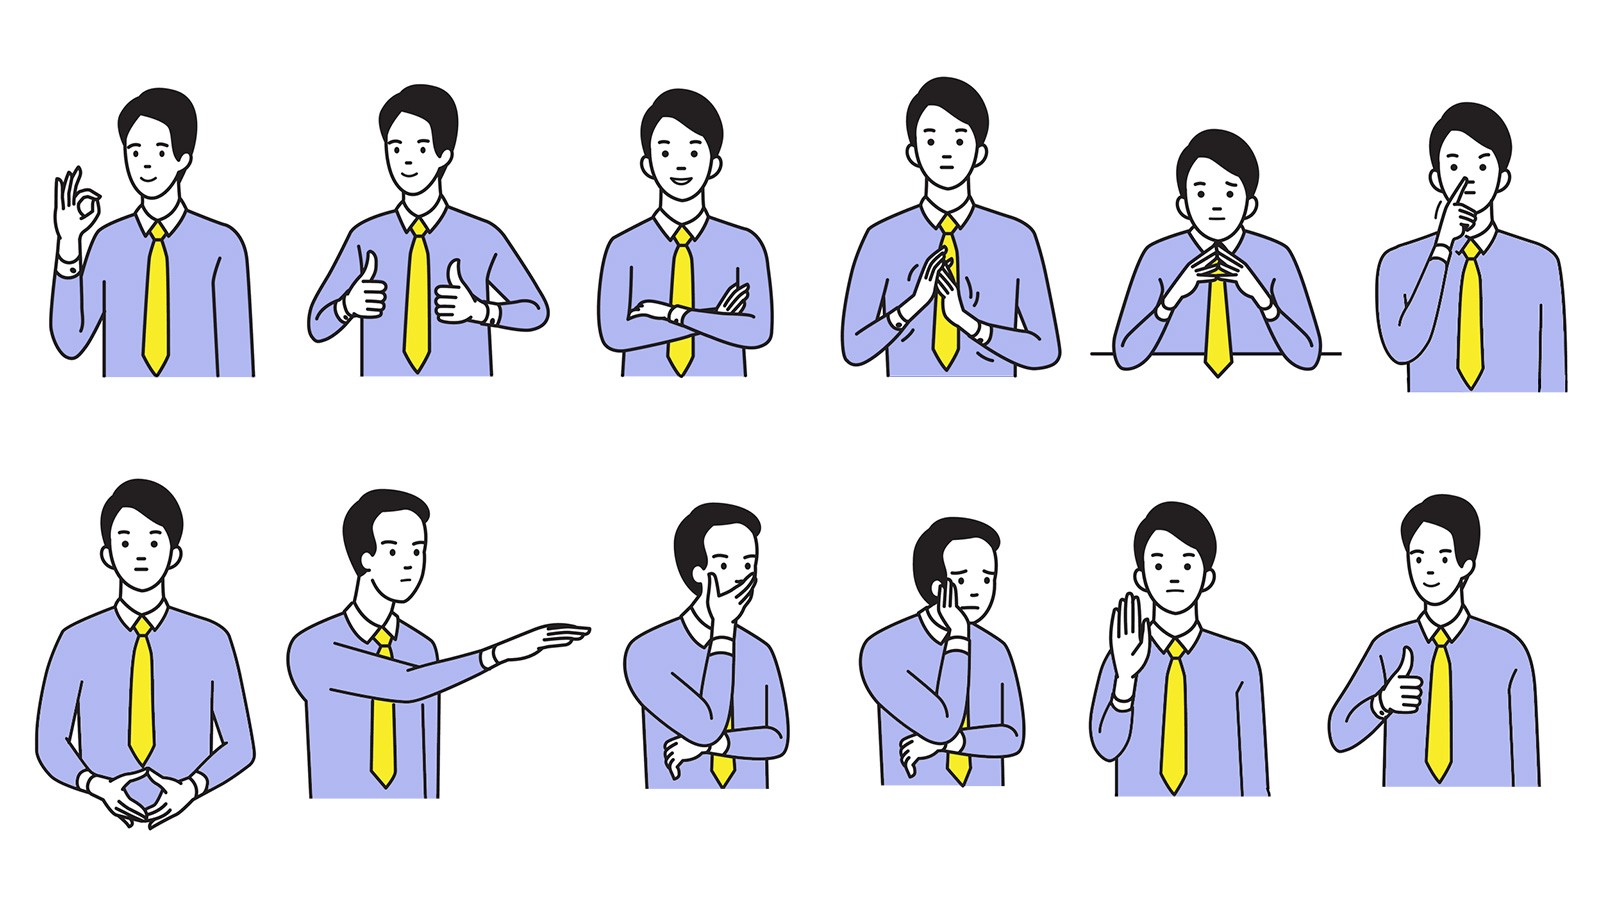 Examples of Body Language